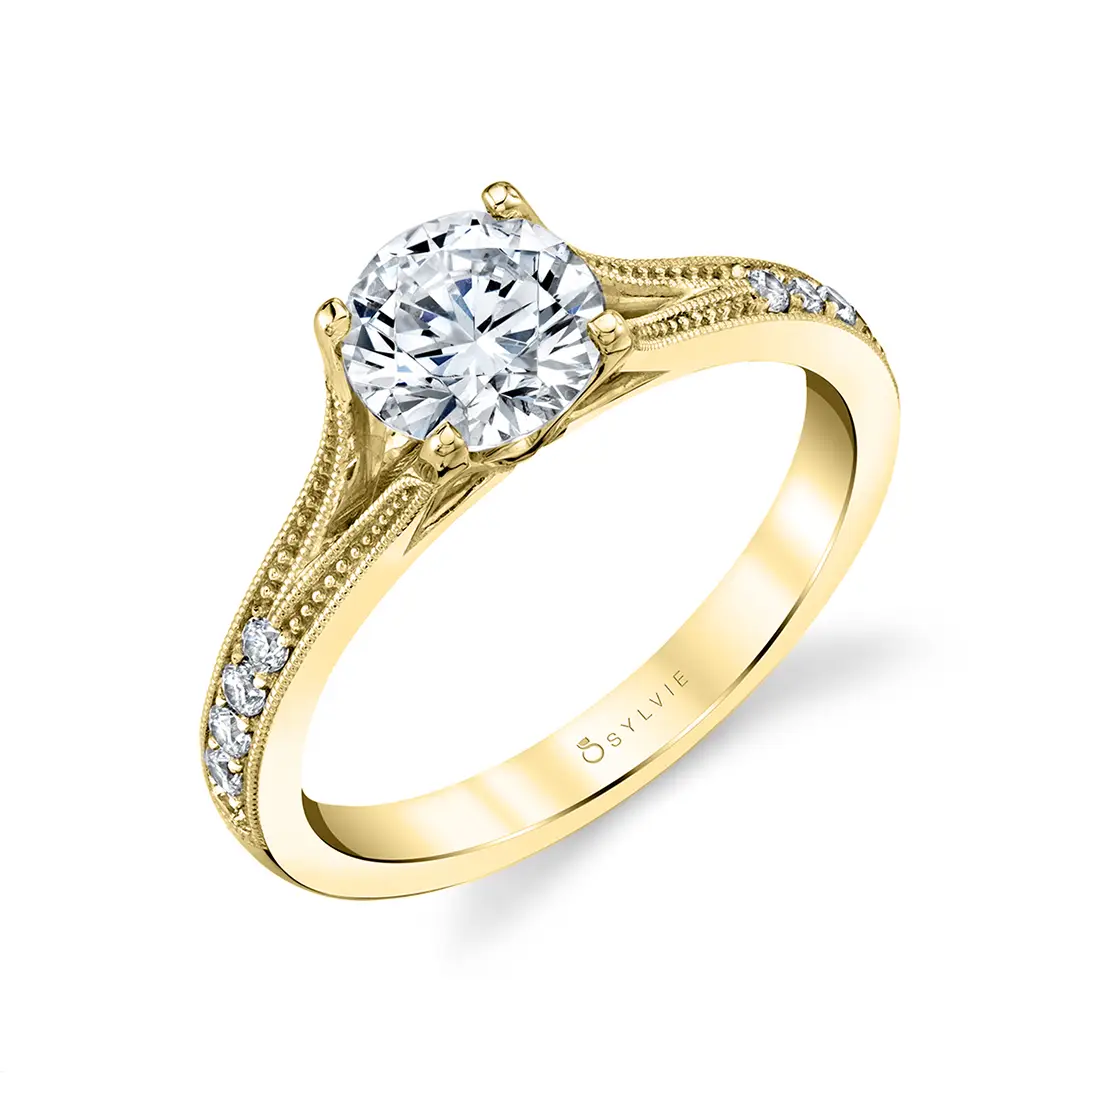 Unique Flower Engagement Ring Set No.2 White Gold - Moissanite/Diamond